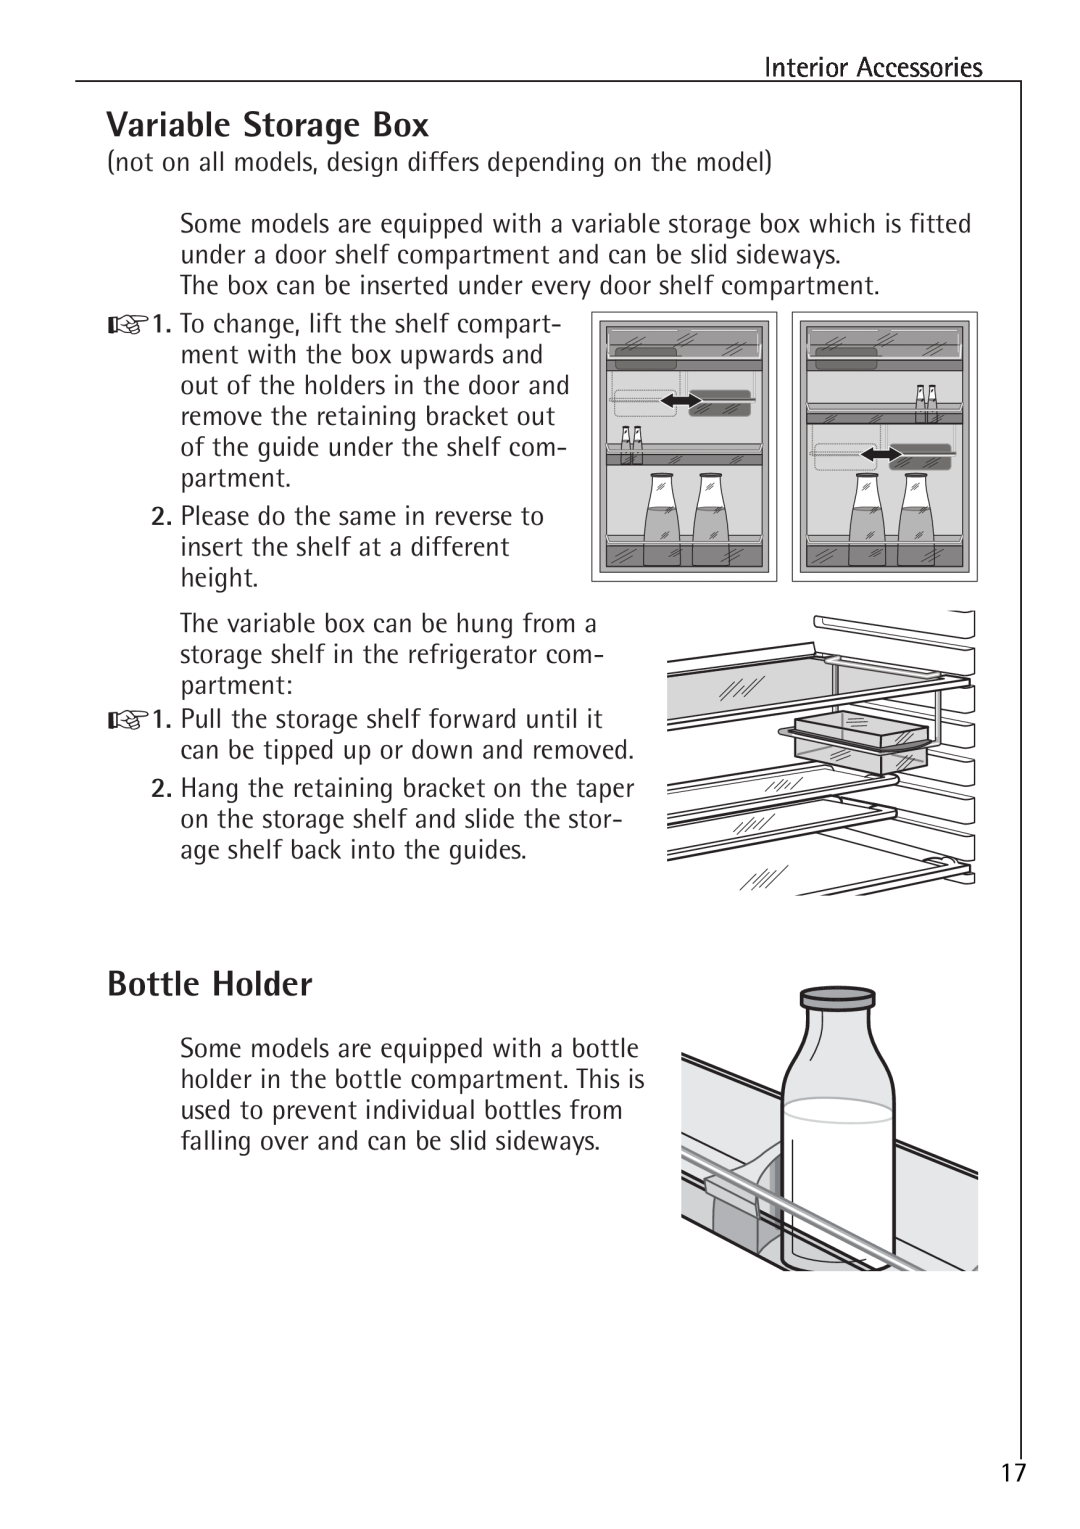 Electrolux 1583-8 TK operating instructions Variable Storage Box, Bottle Holder 